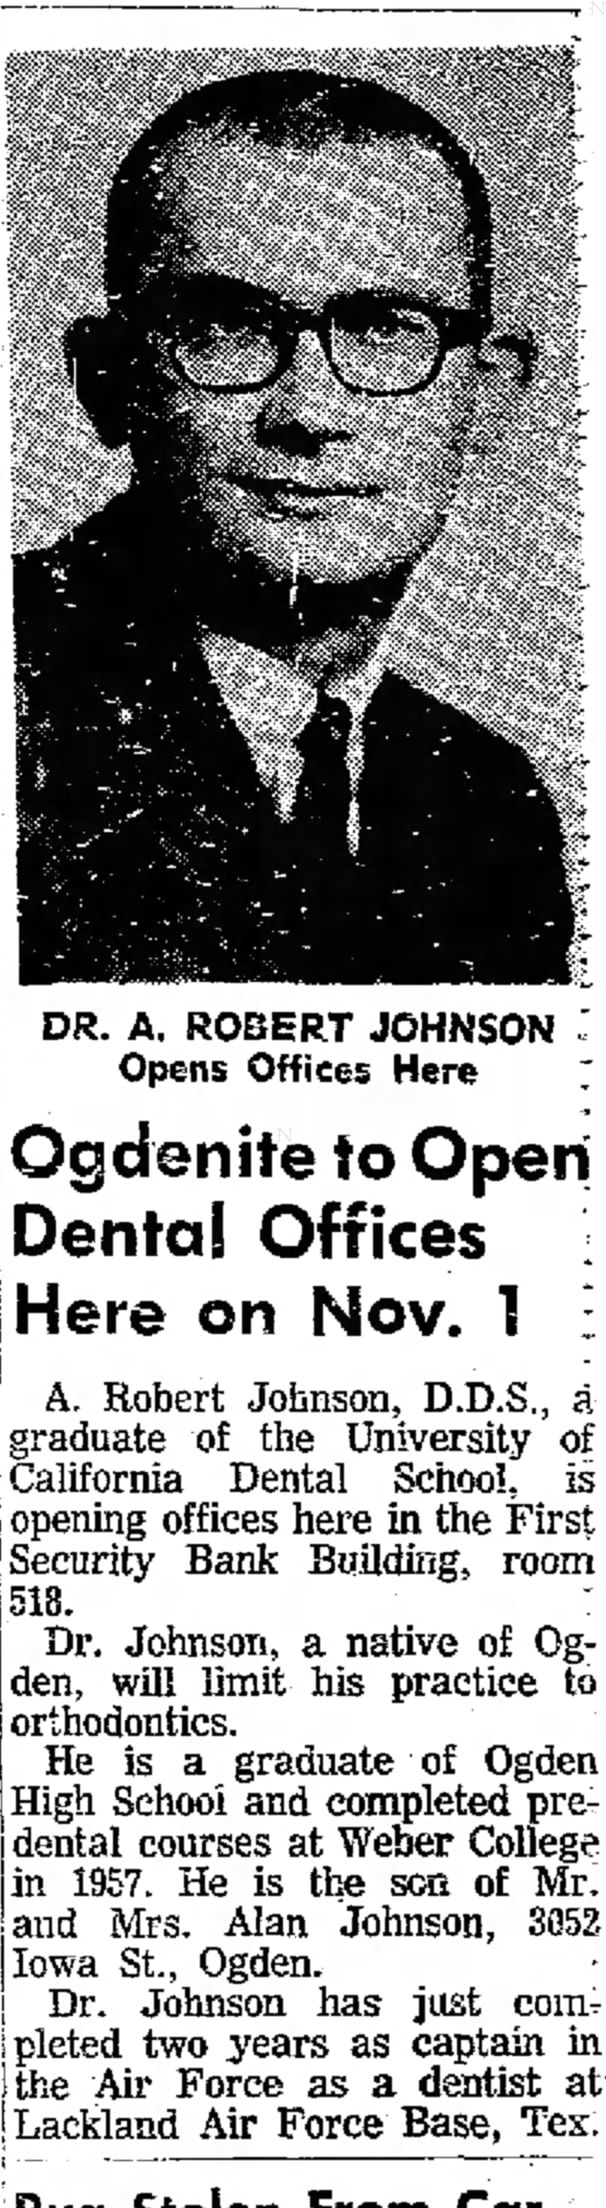 Robert Johnson opens Dental Office